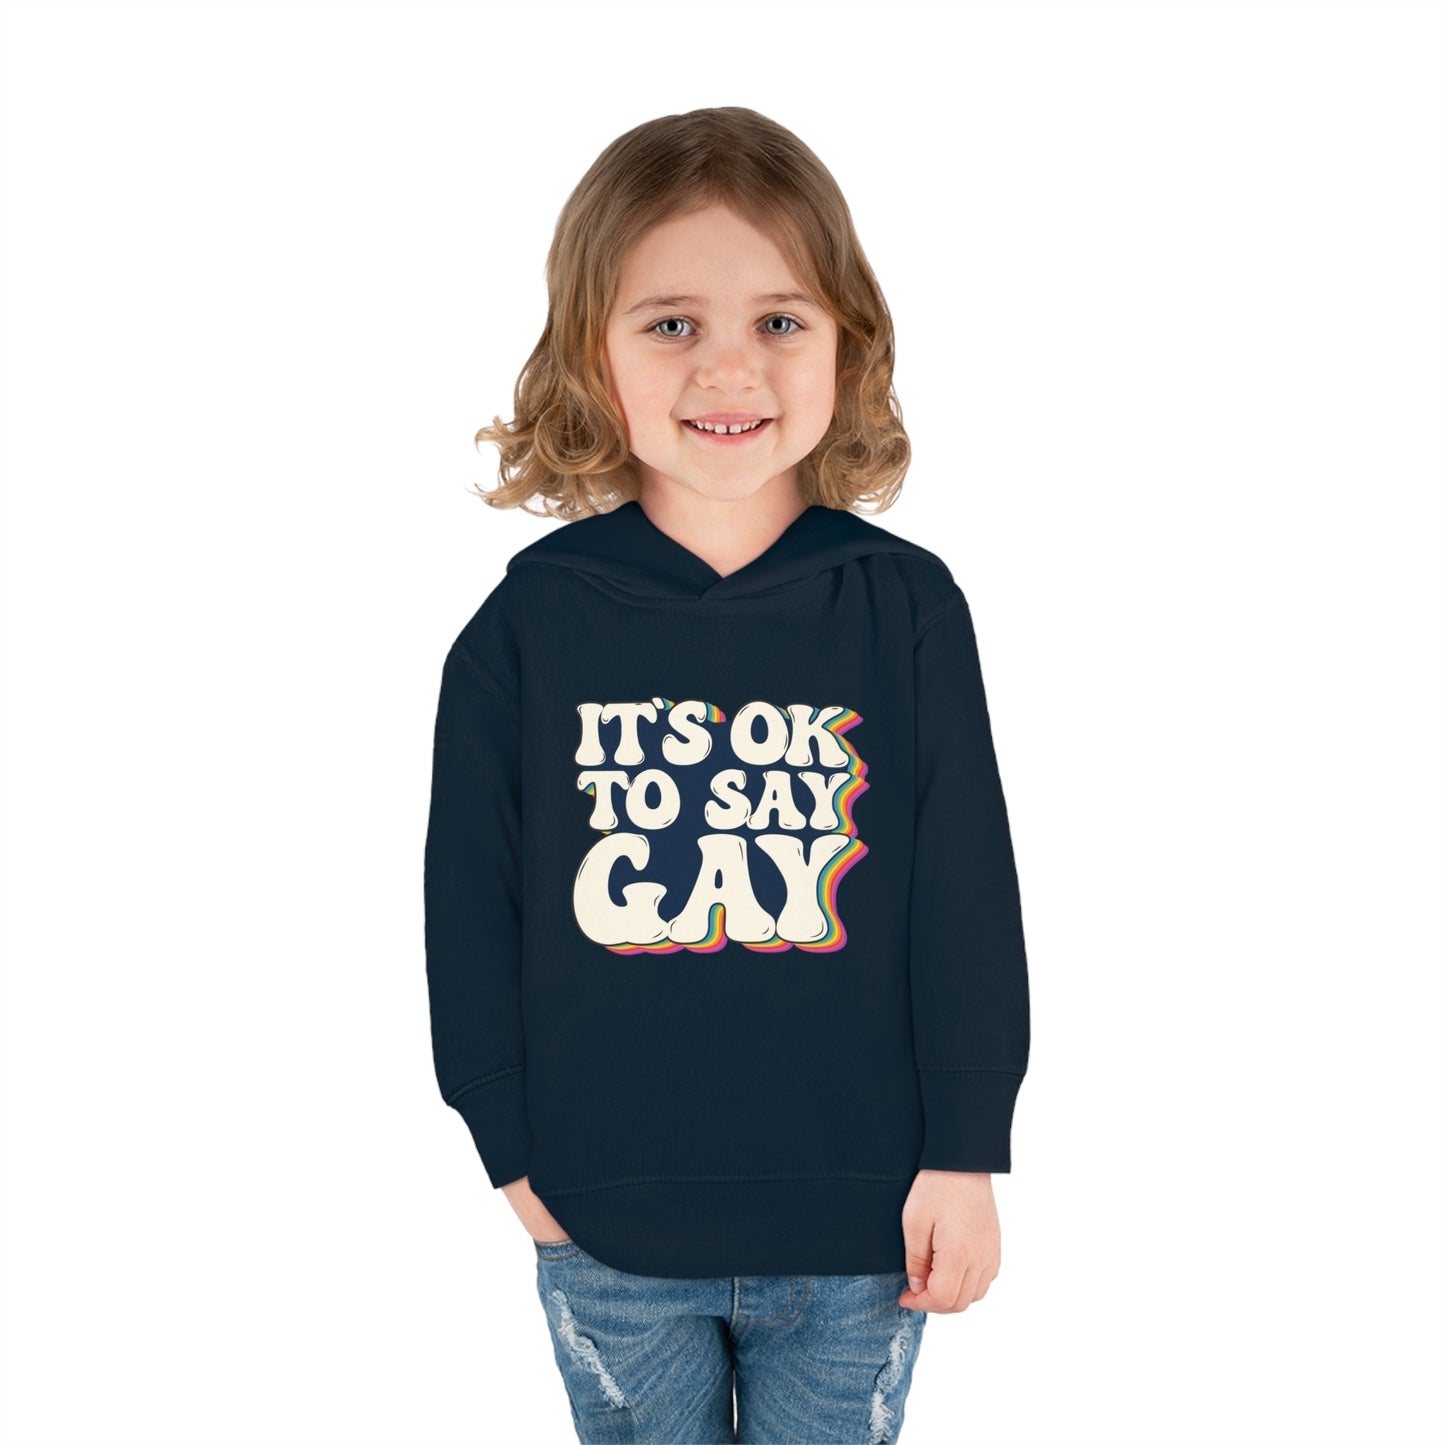 “It’s OK to Say Gay” Toddler Hoodie